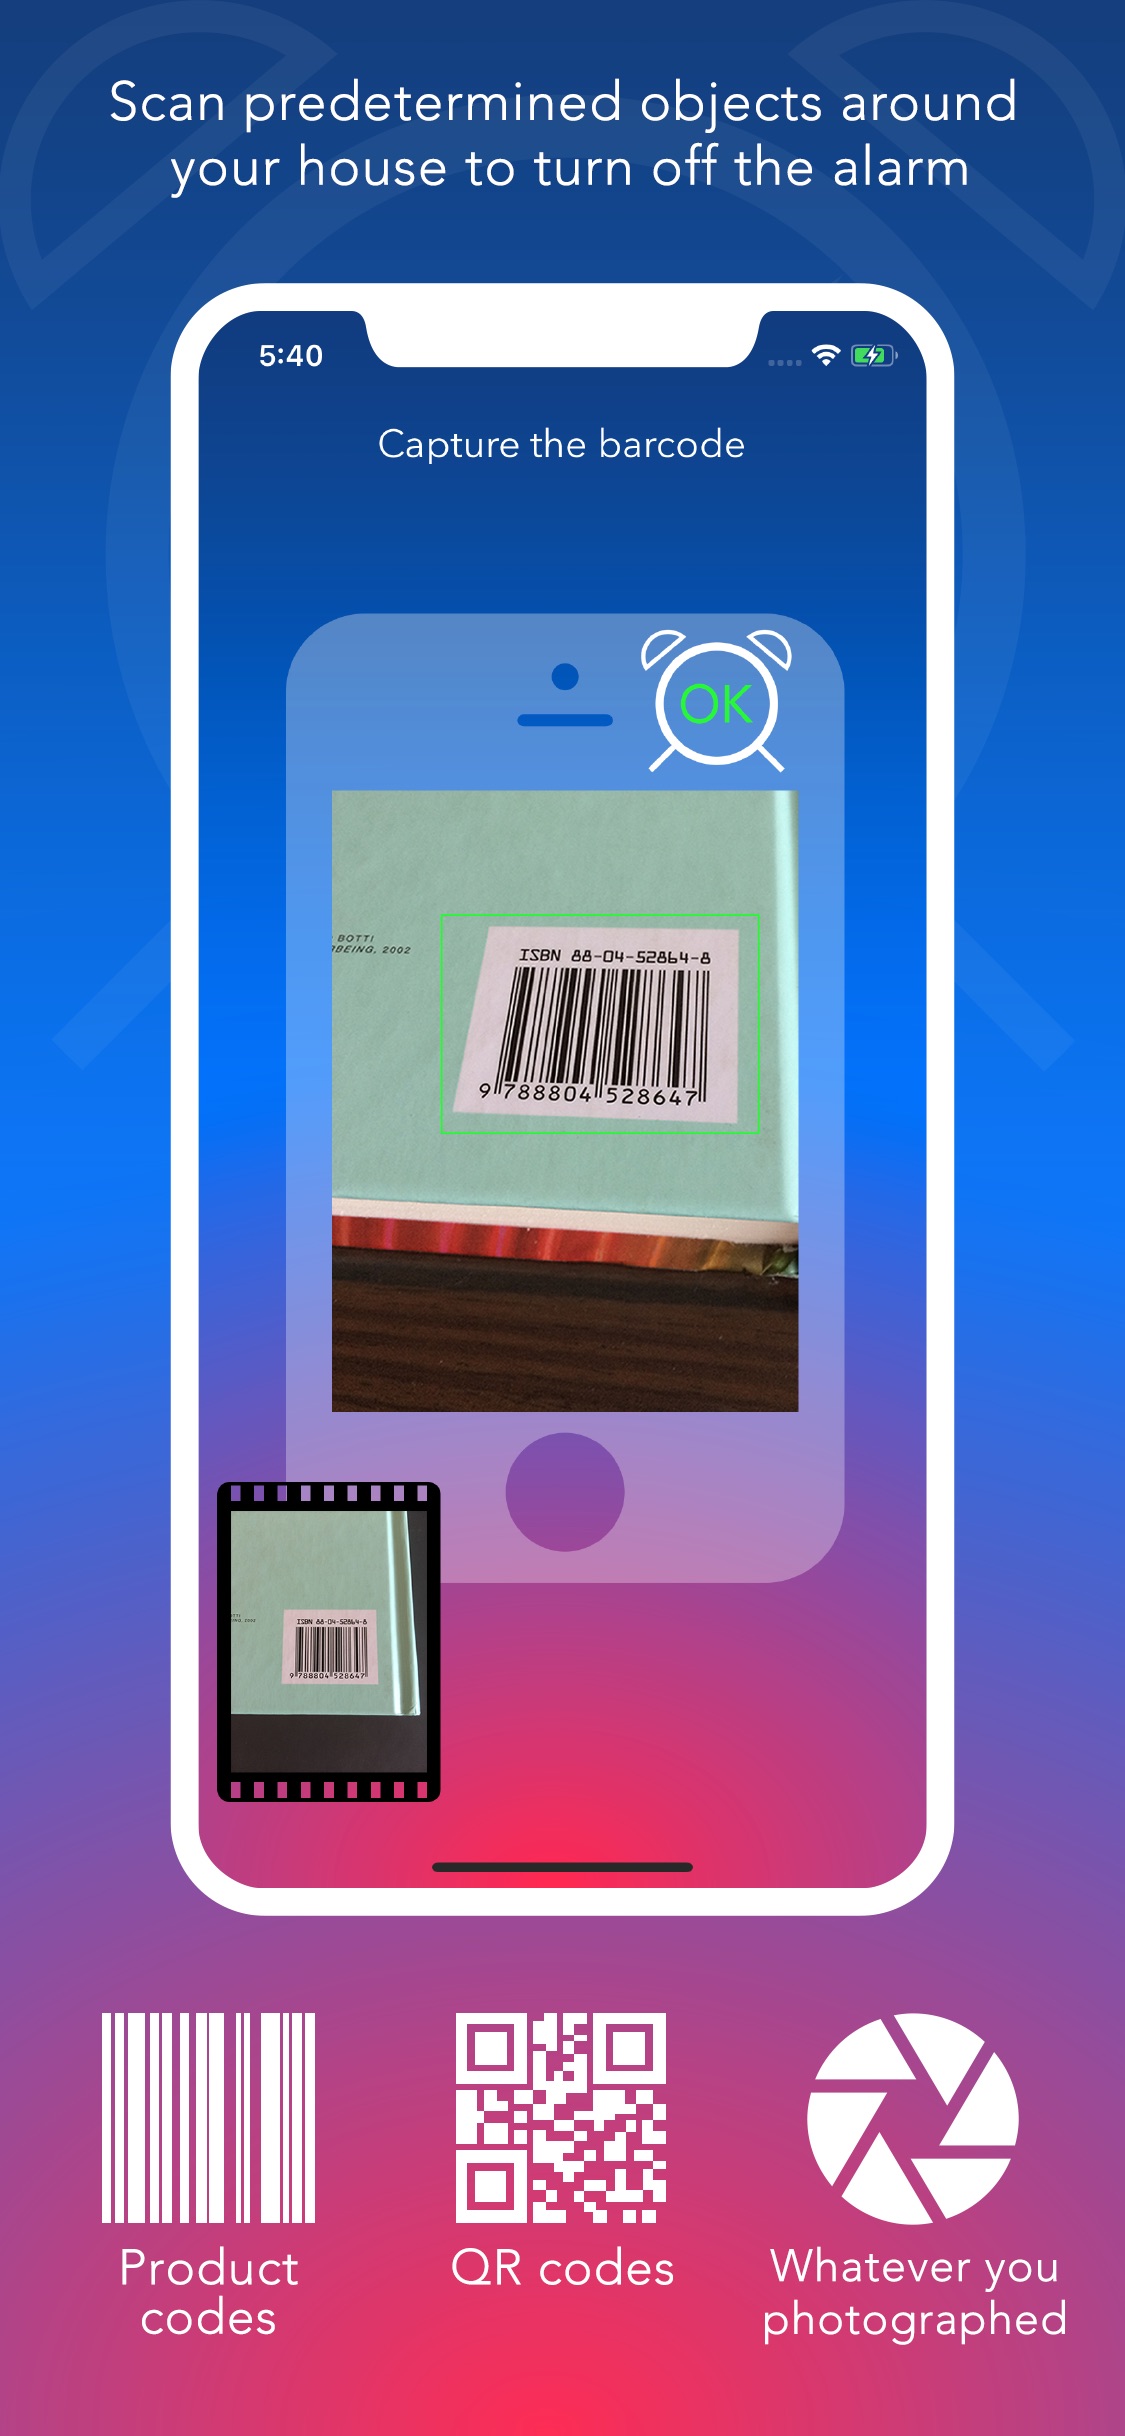 Screenshot do app FreakyAlarm — Games & Barcodes